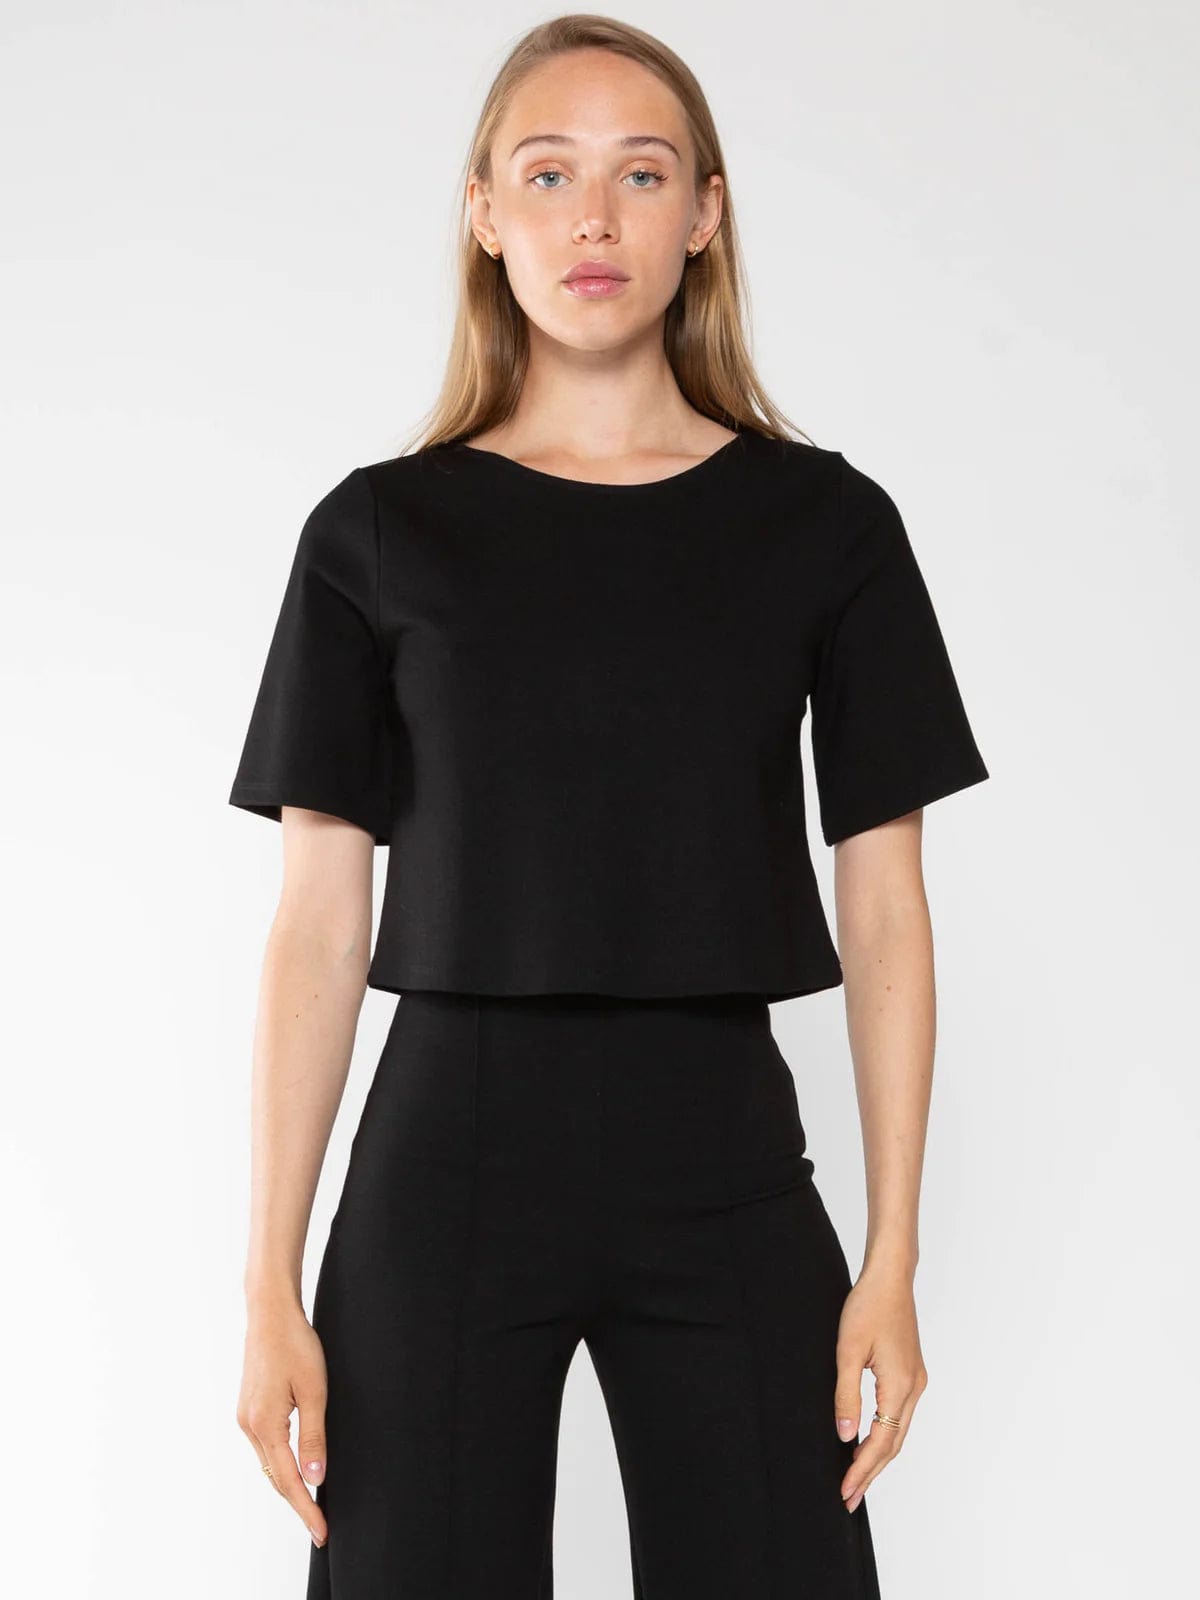 Ripley Rader Women's Shirts & Tops Black / 1 (XS) Ripley Rader Ponte Knit Short Sleeve Top